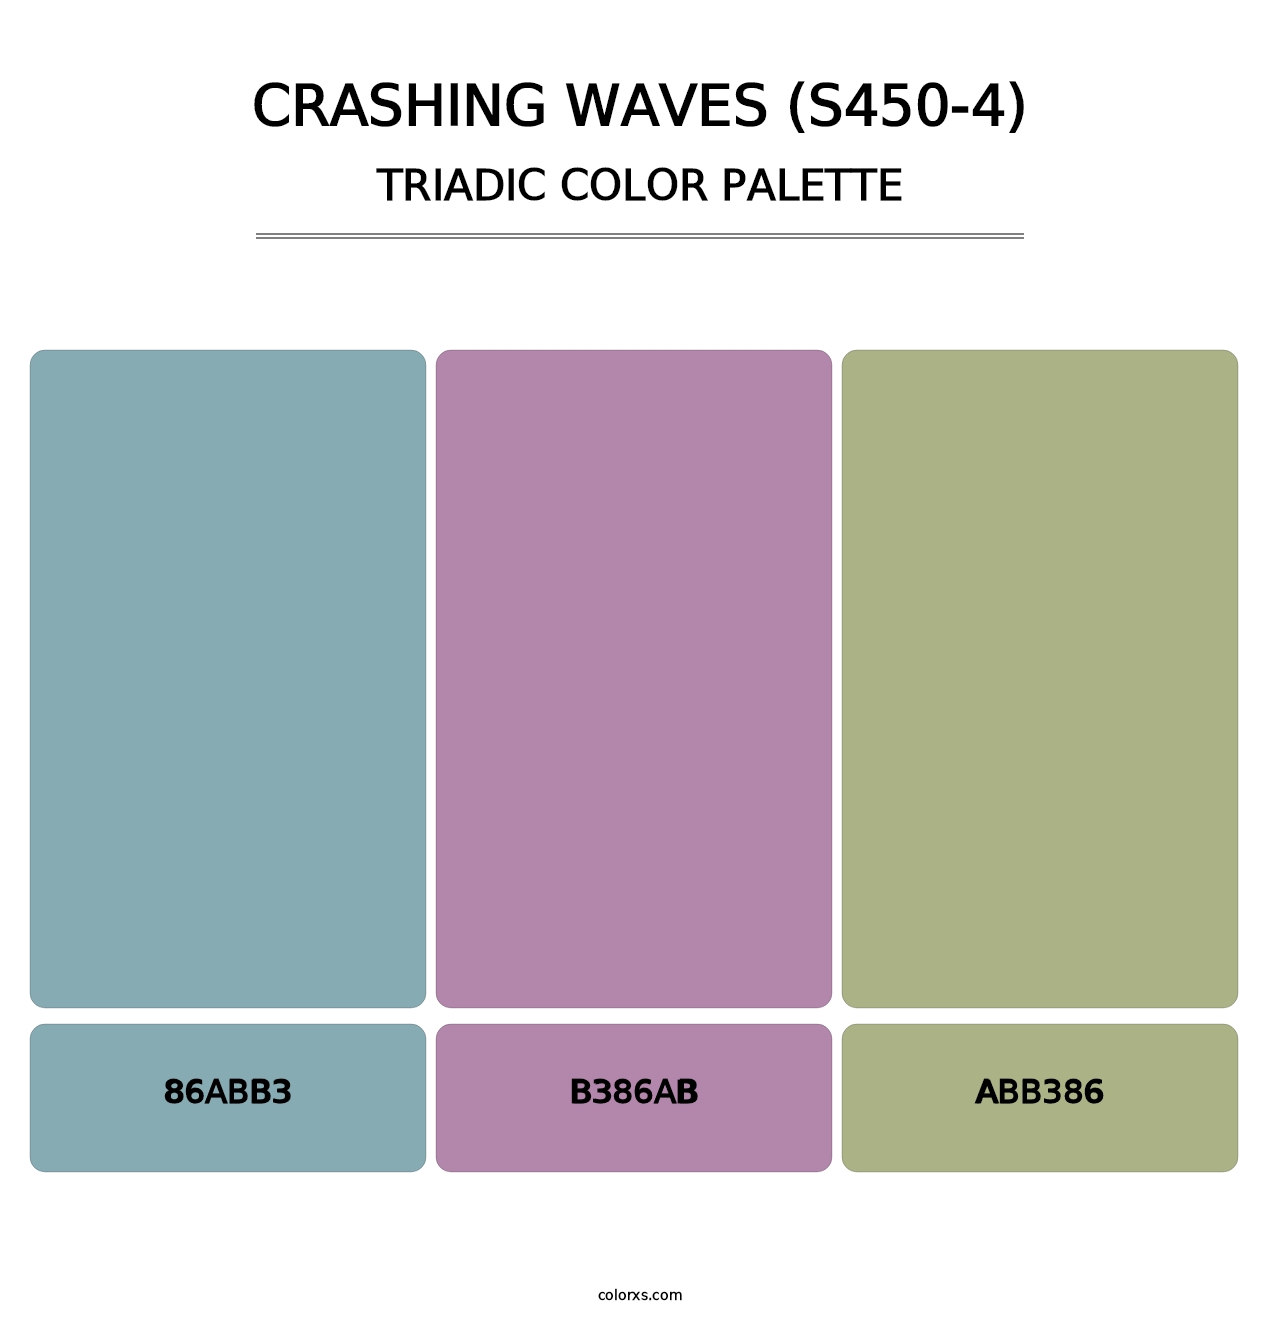 Crashing Waves (S450-4) - Triadic Color Palette